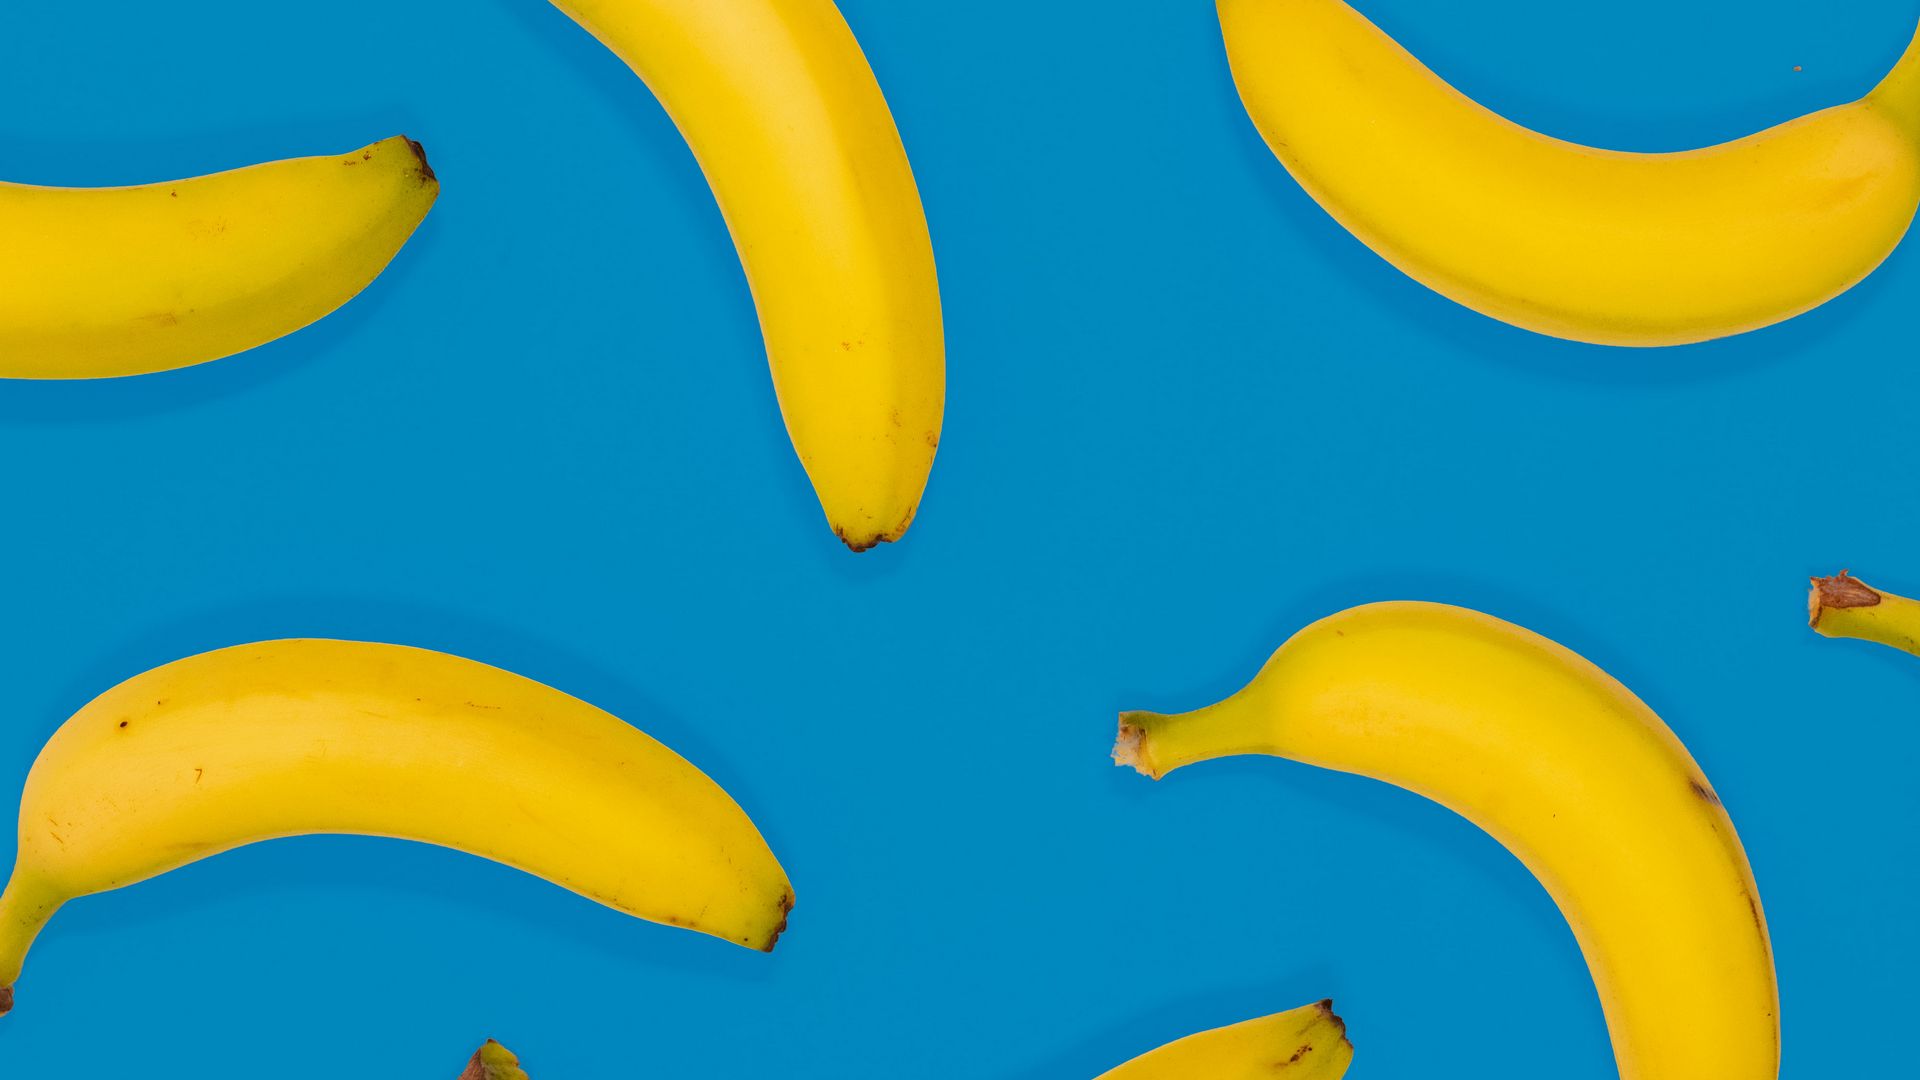 Download Wallpaper 1920x1080 Bananas Fruit Yellow Blue Full Hd Hdtv